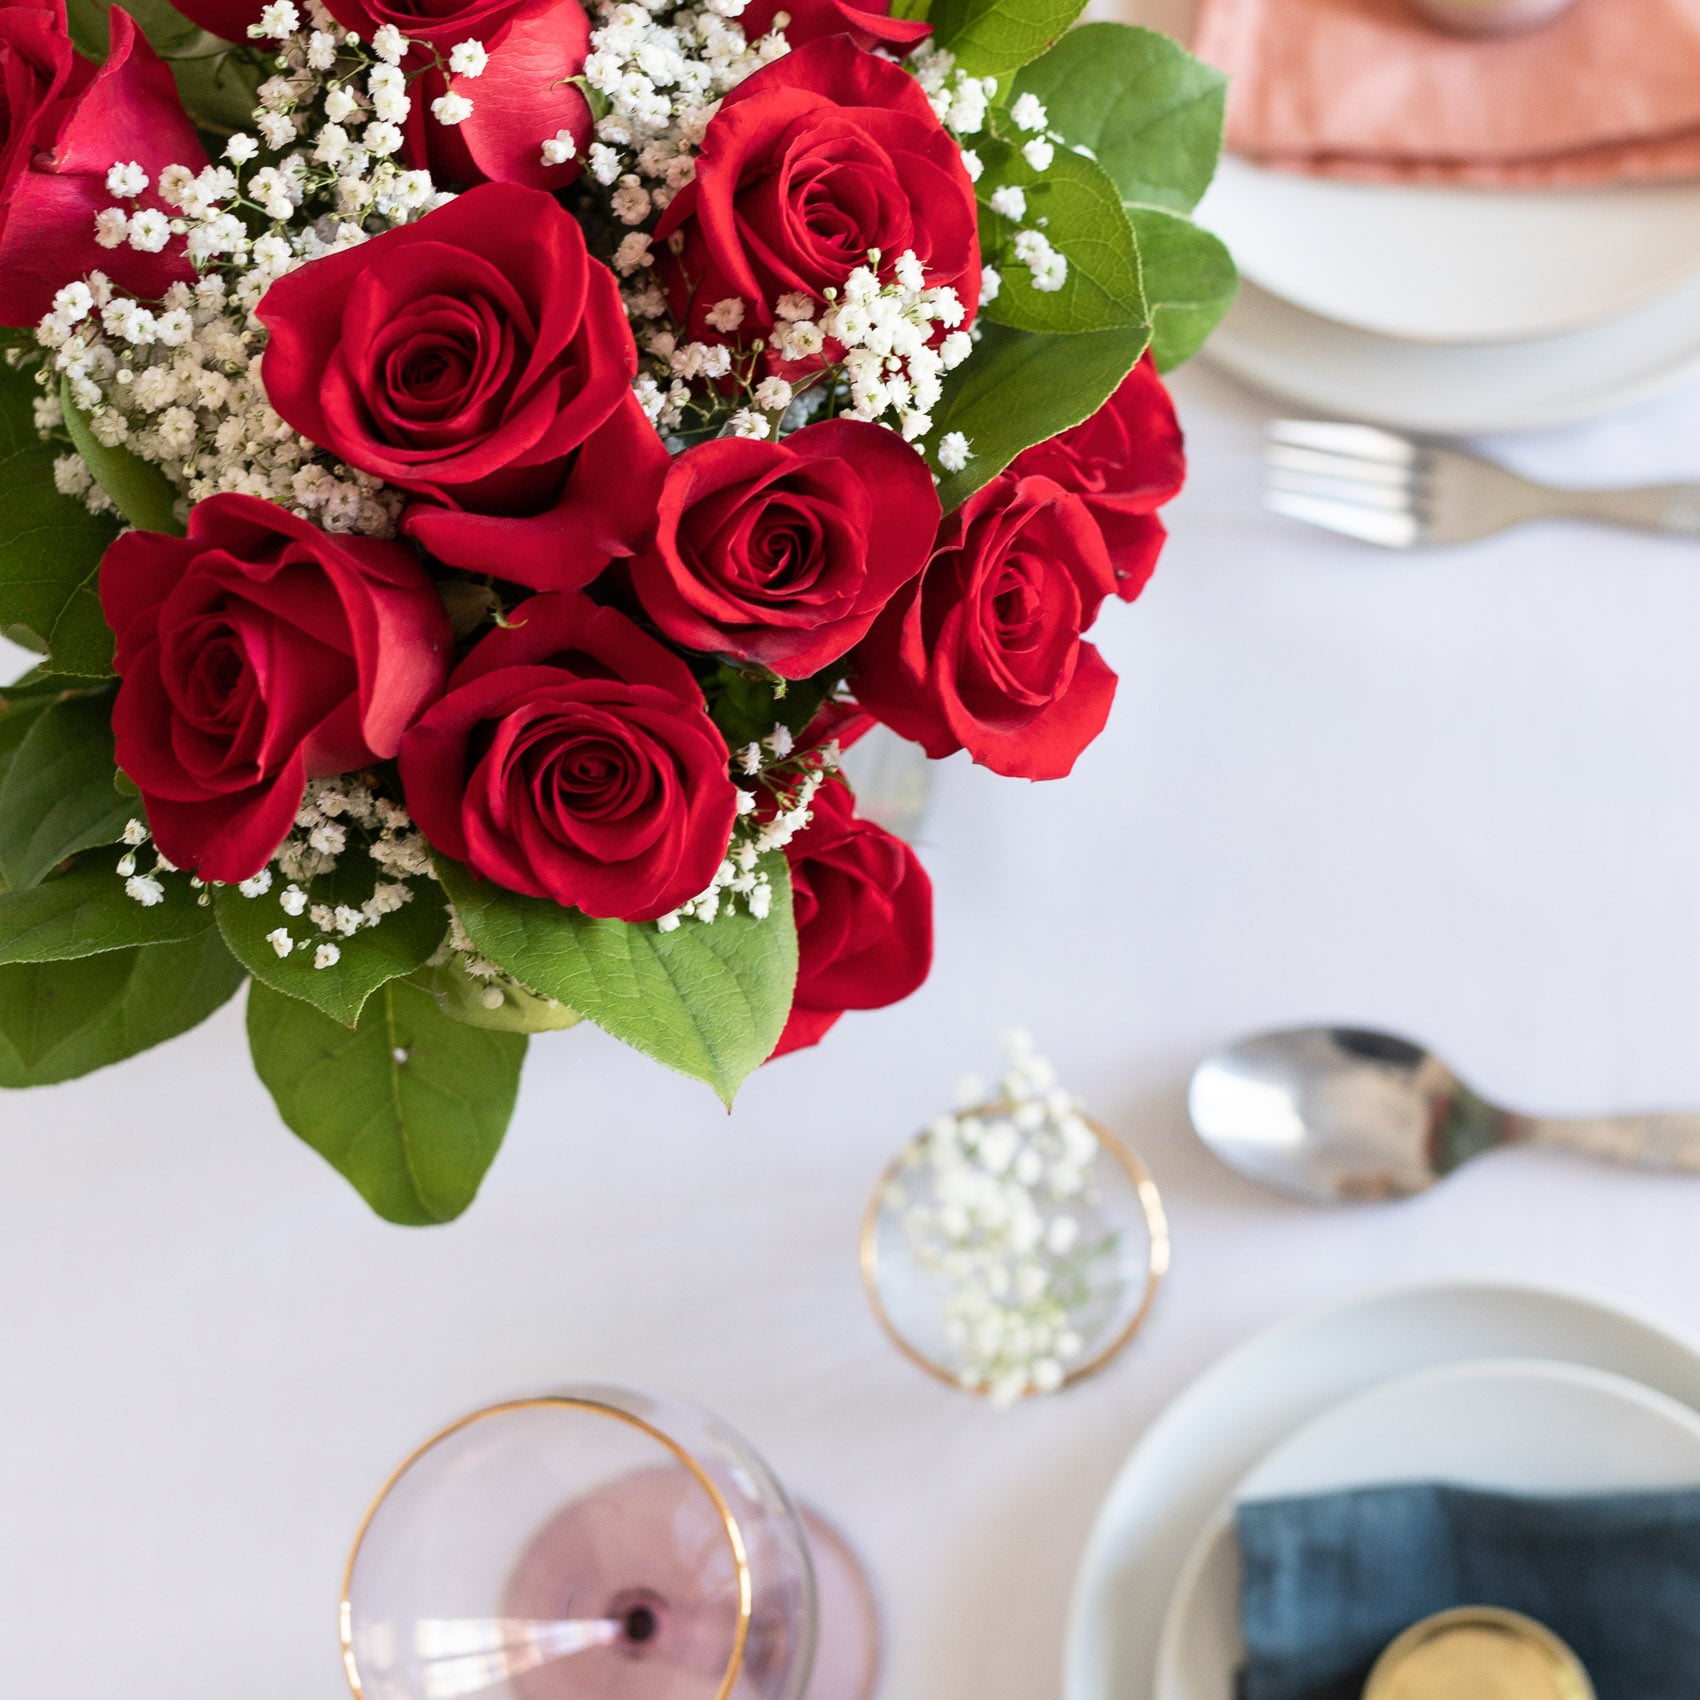 FloraQueen FQ108 12 rosas rojas 28012019 7 web min Cliente del mes: Flores de San Valentín 3